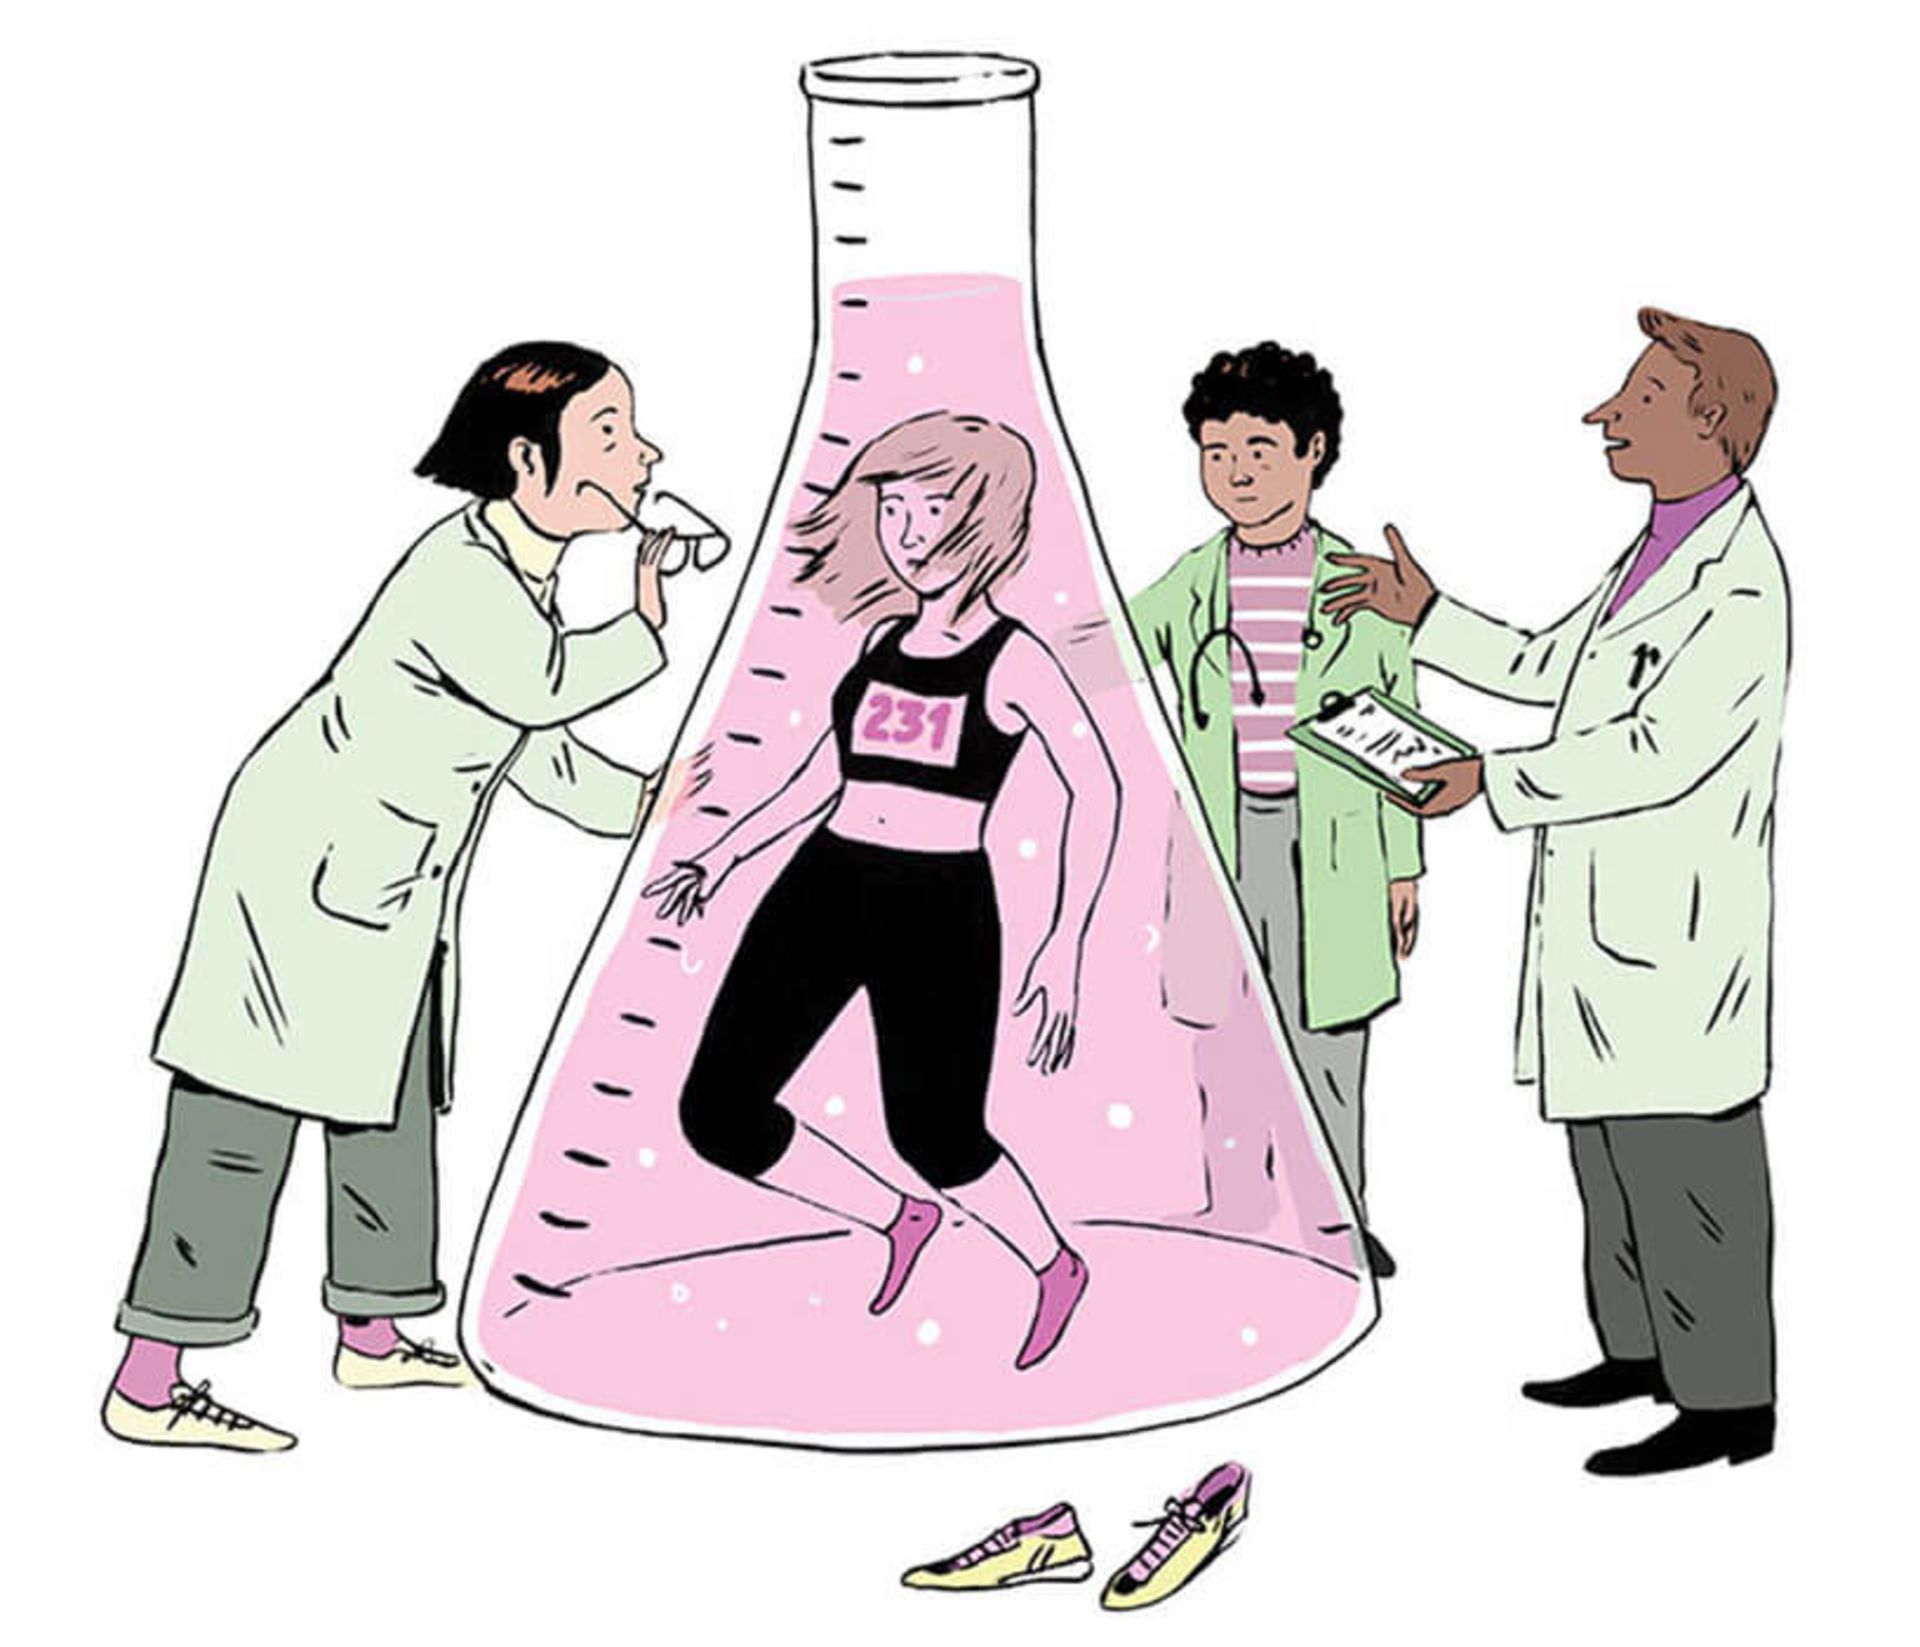 مرجع متخصصين ايران دوپينگ ژني / gene doping